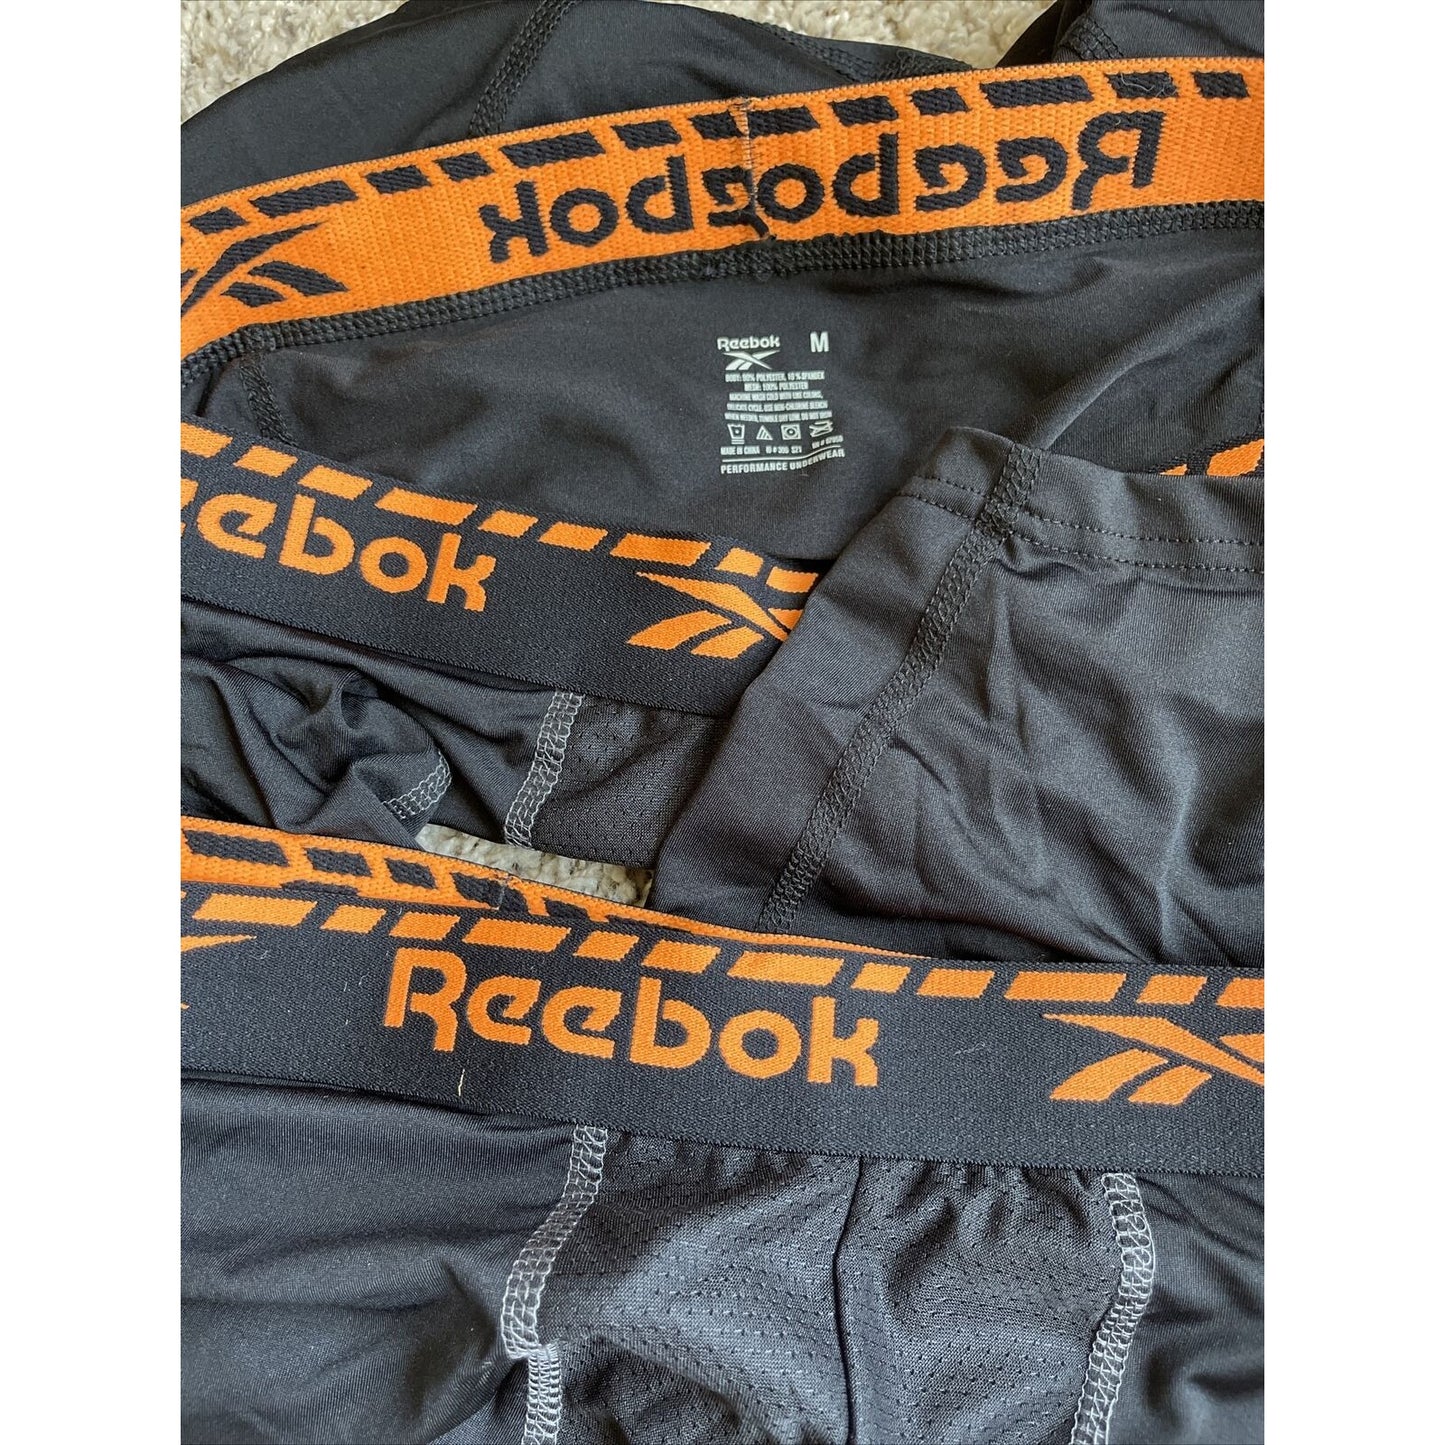 men's black reebok medium orange band compression Boxer Shorts